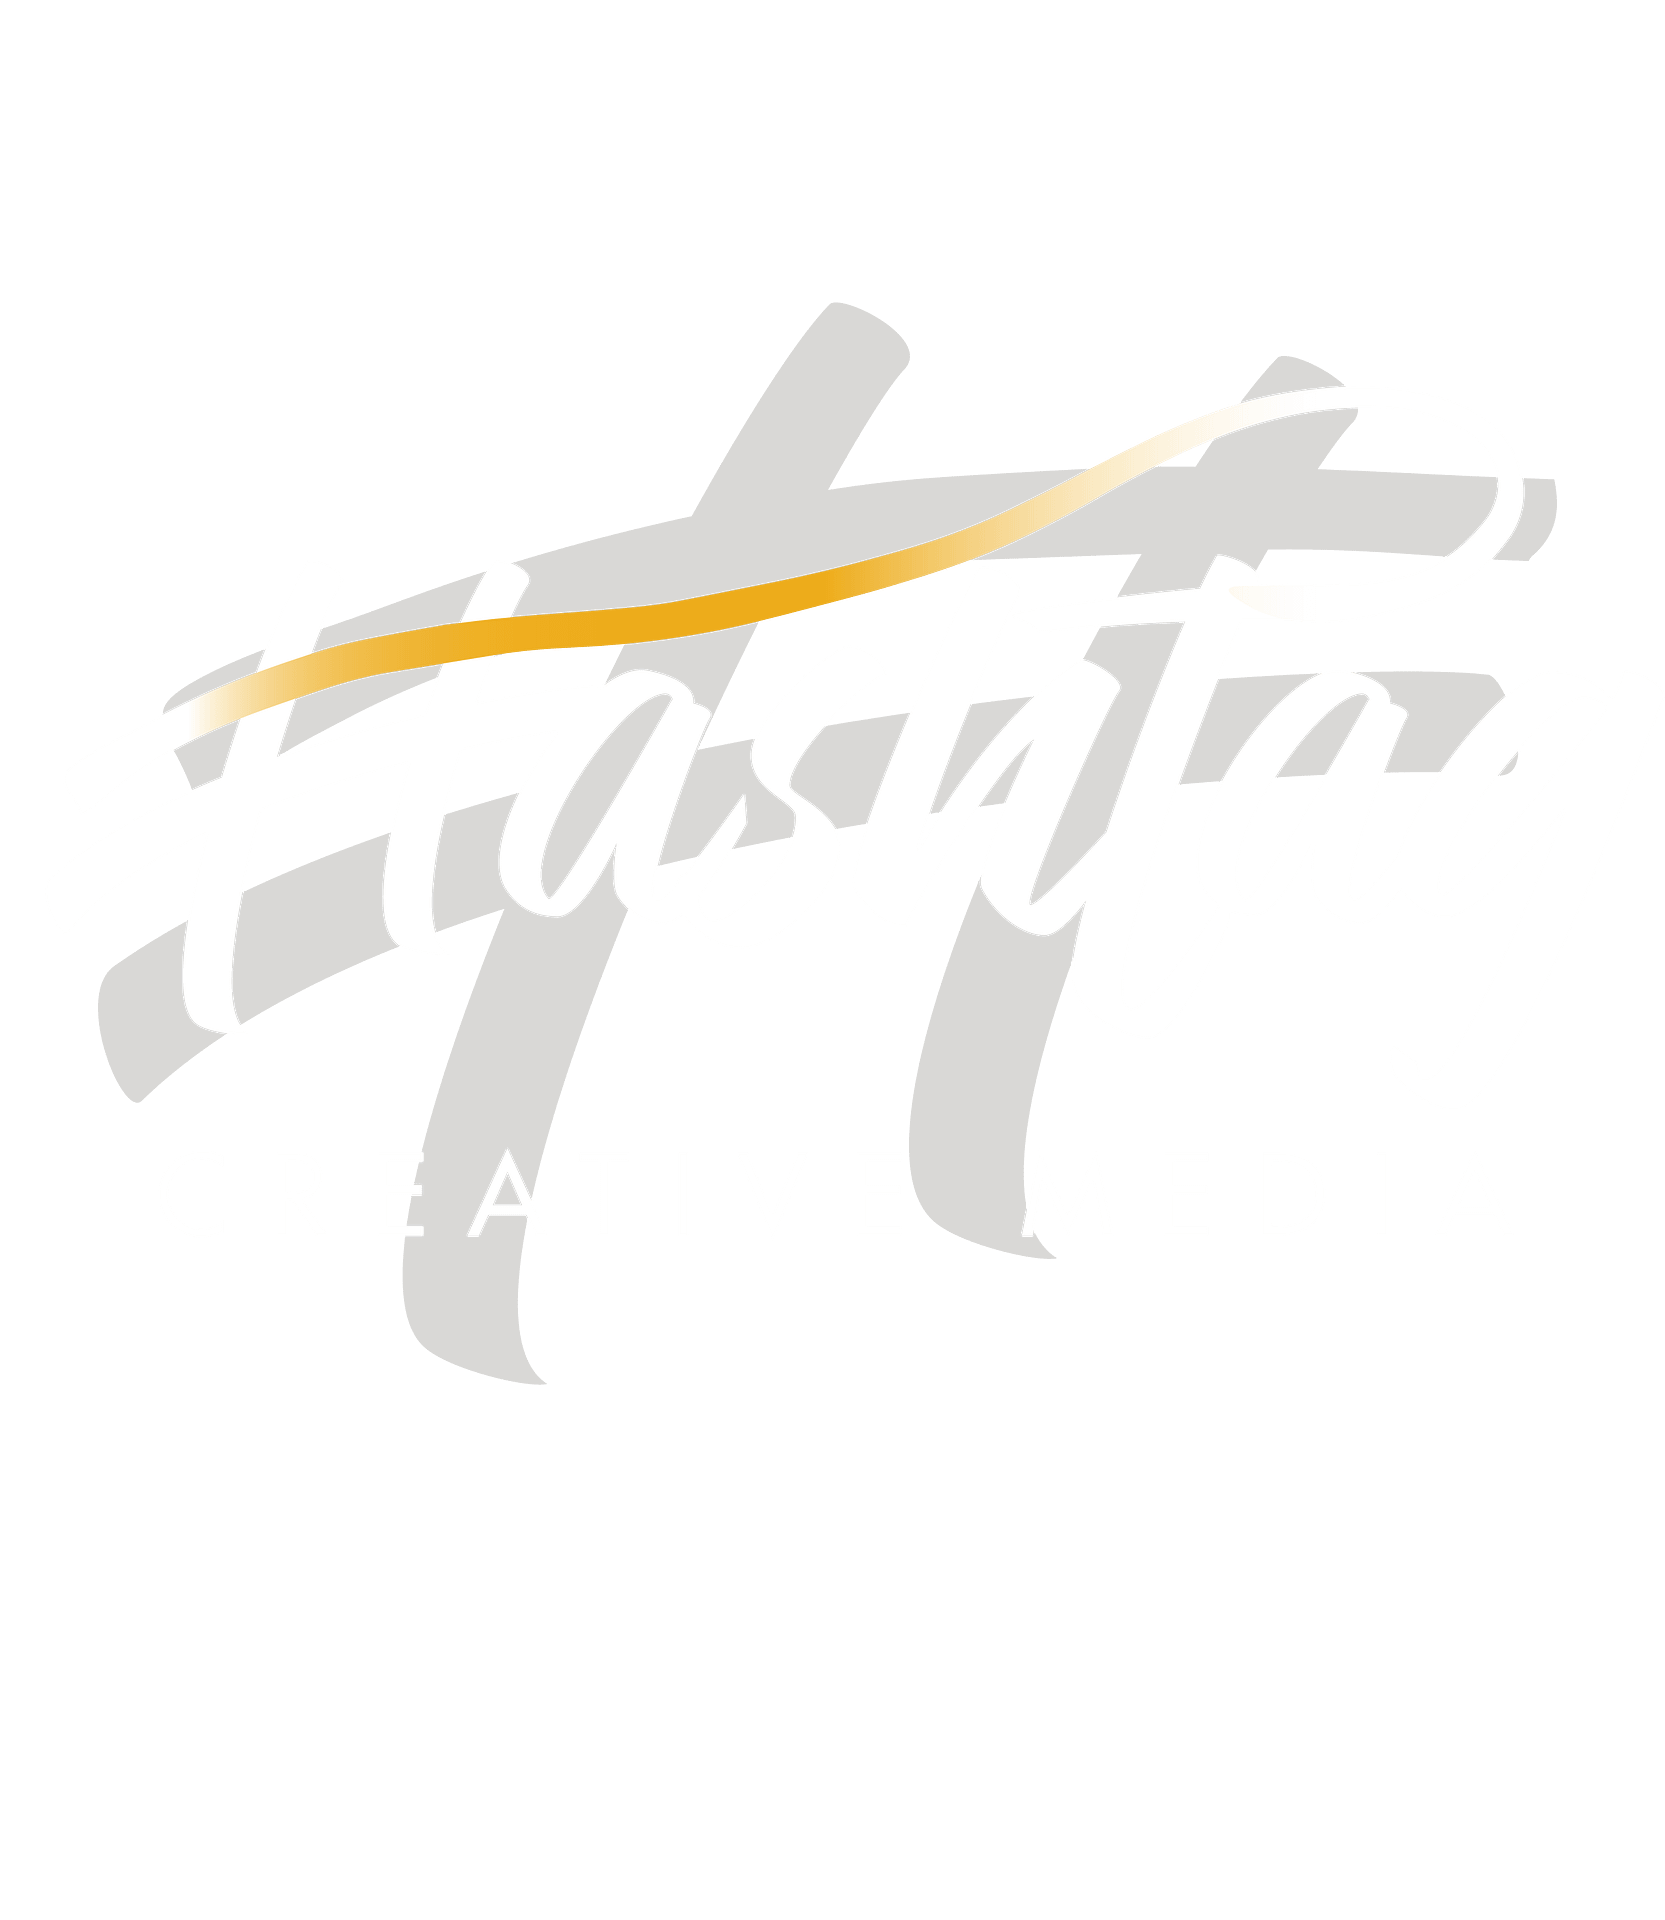 Hashtag Creative Media Text